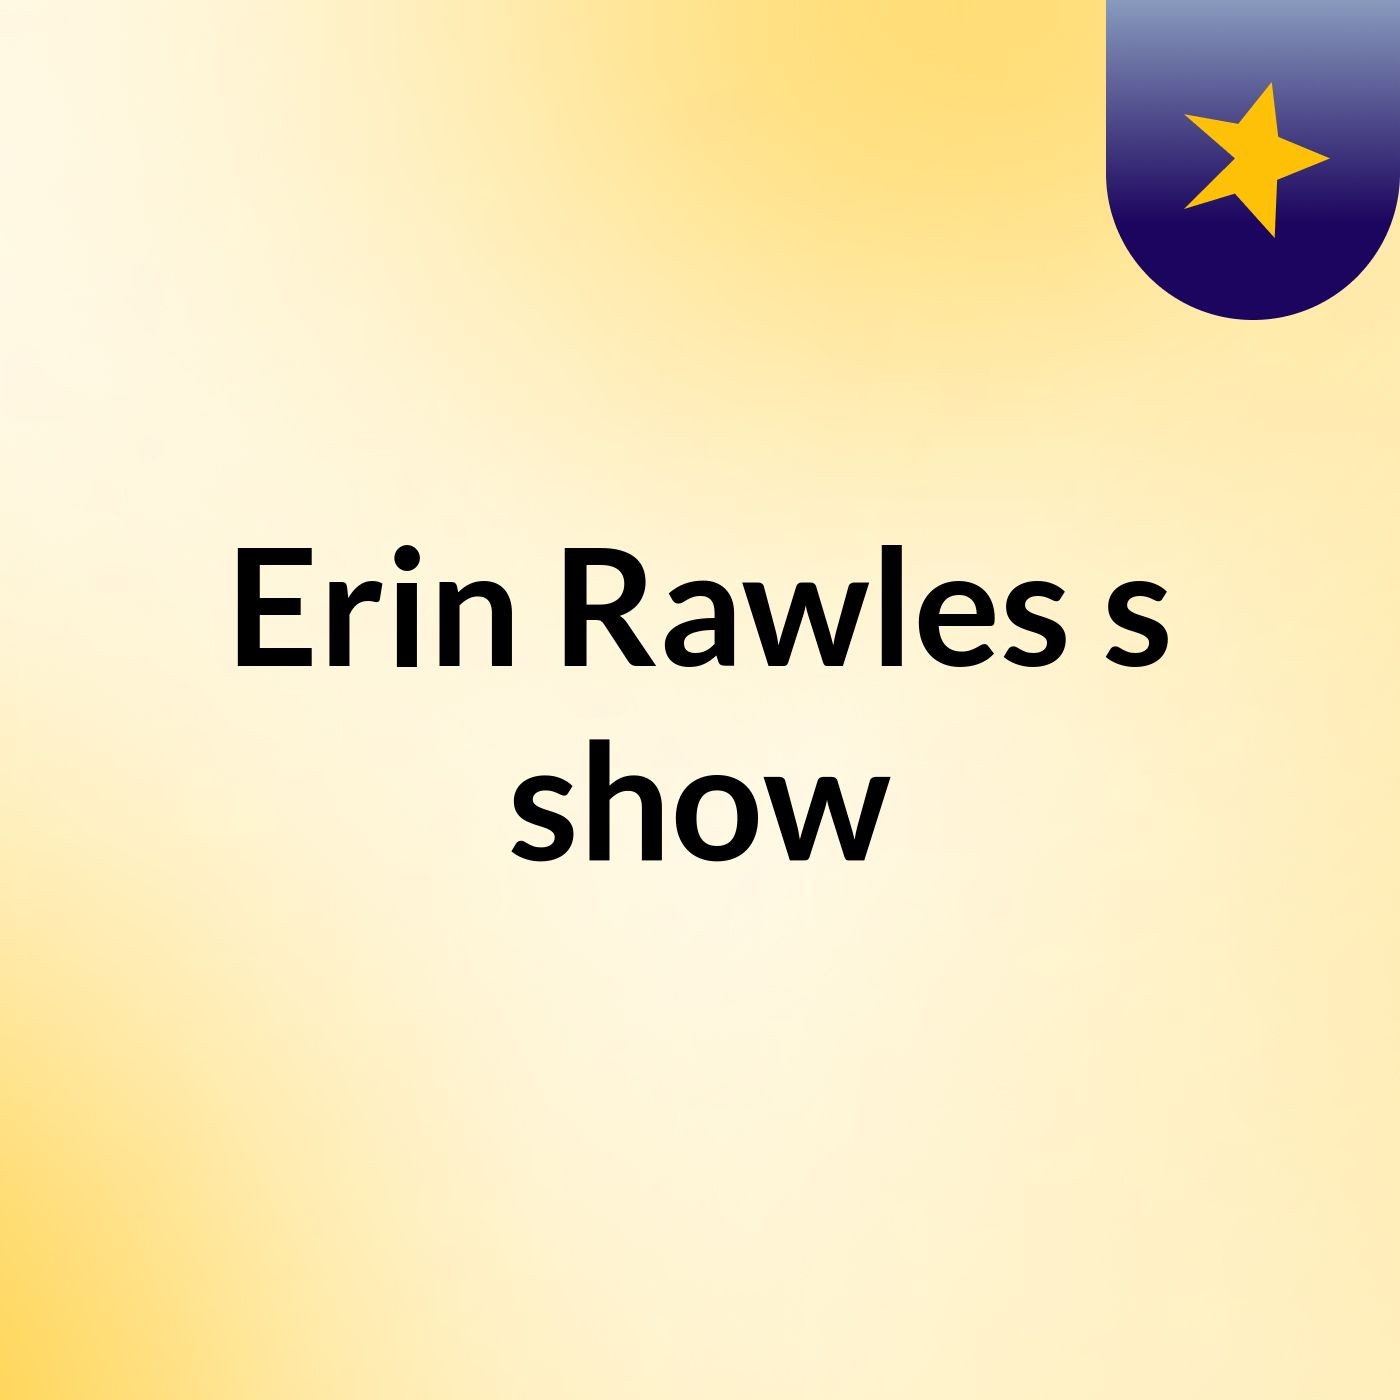 Erin Rawles's show